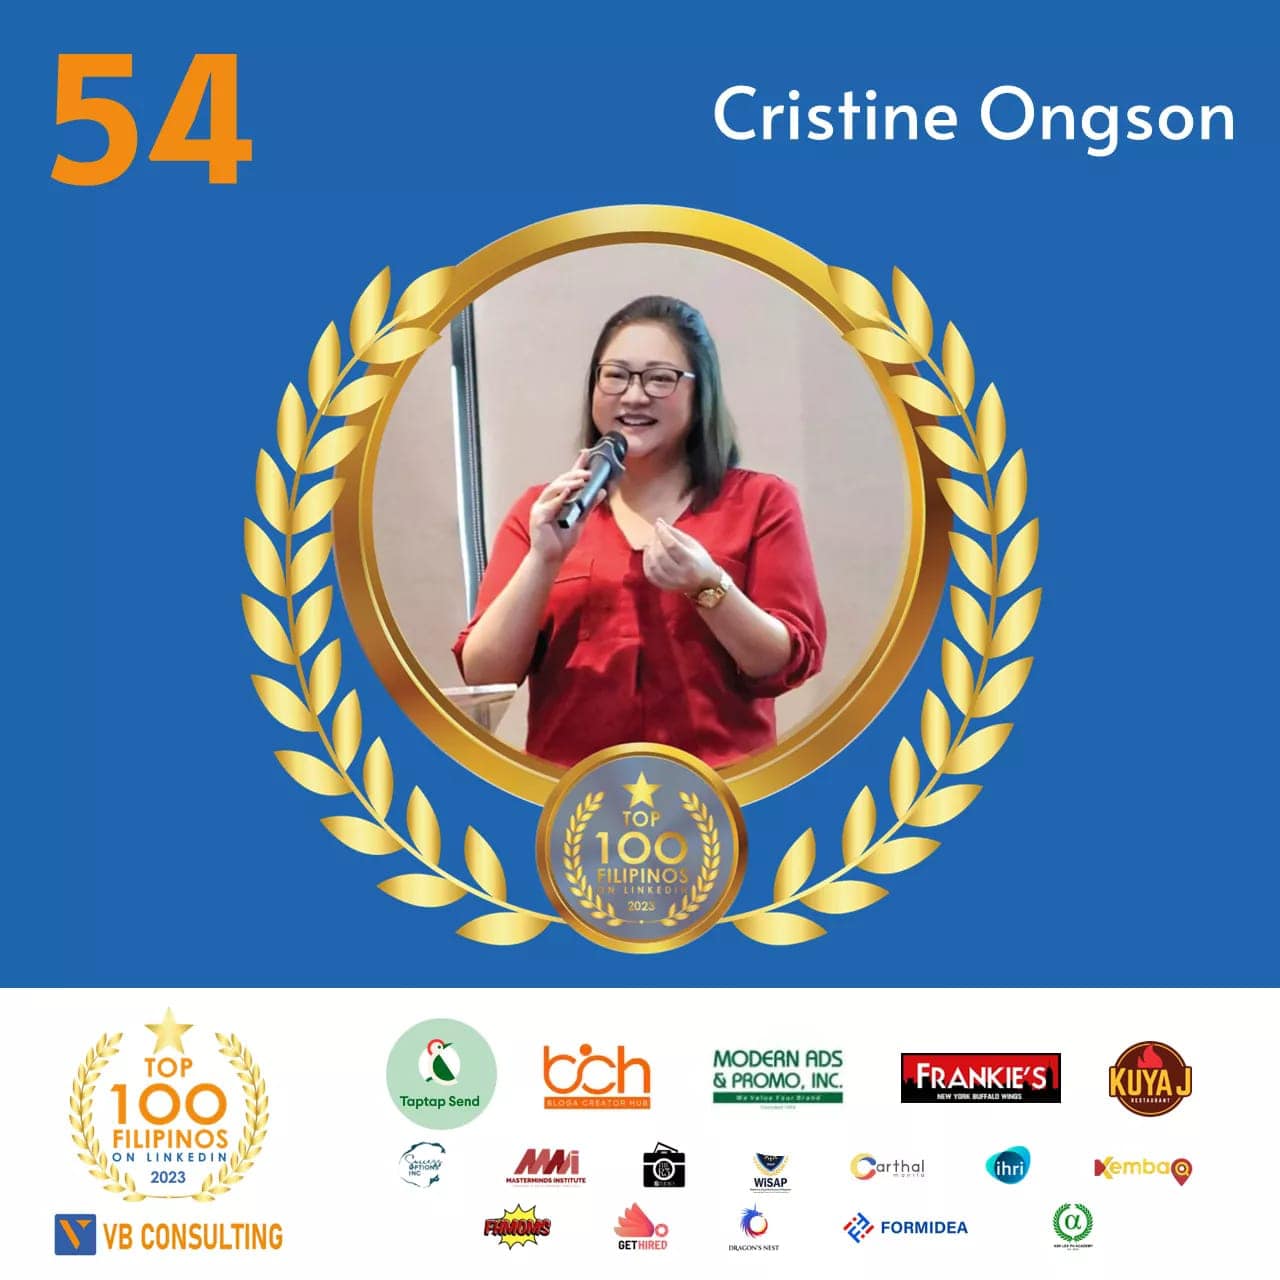 top 100 filipinos linkedin cristine ongson online philippines